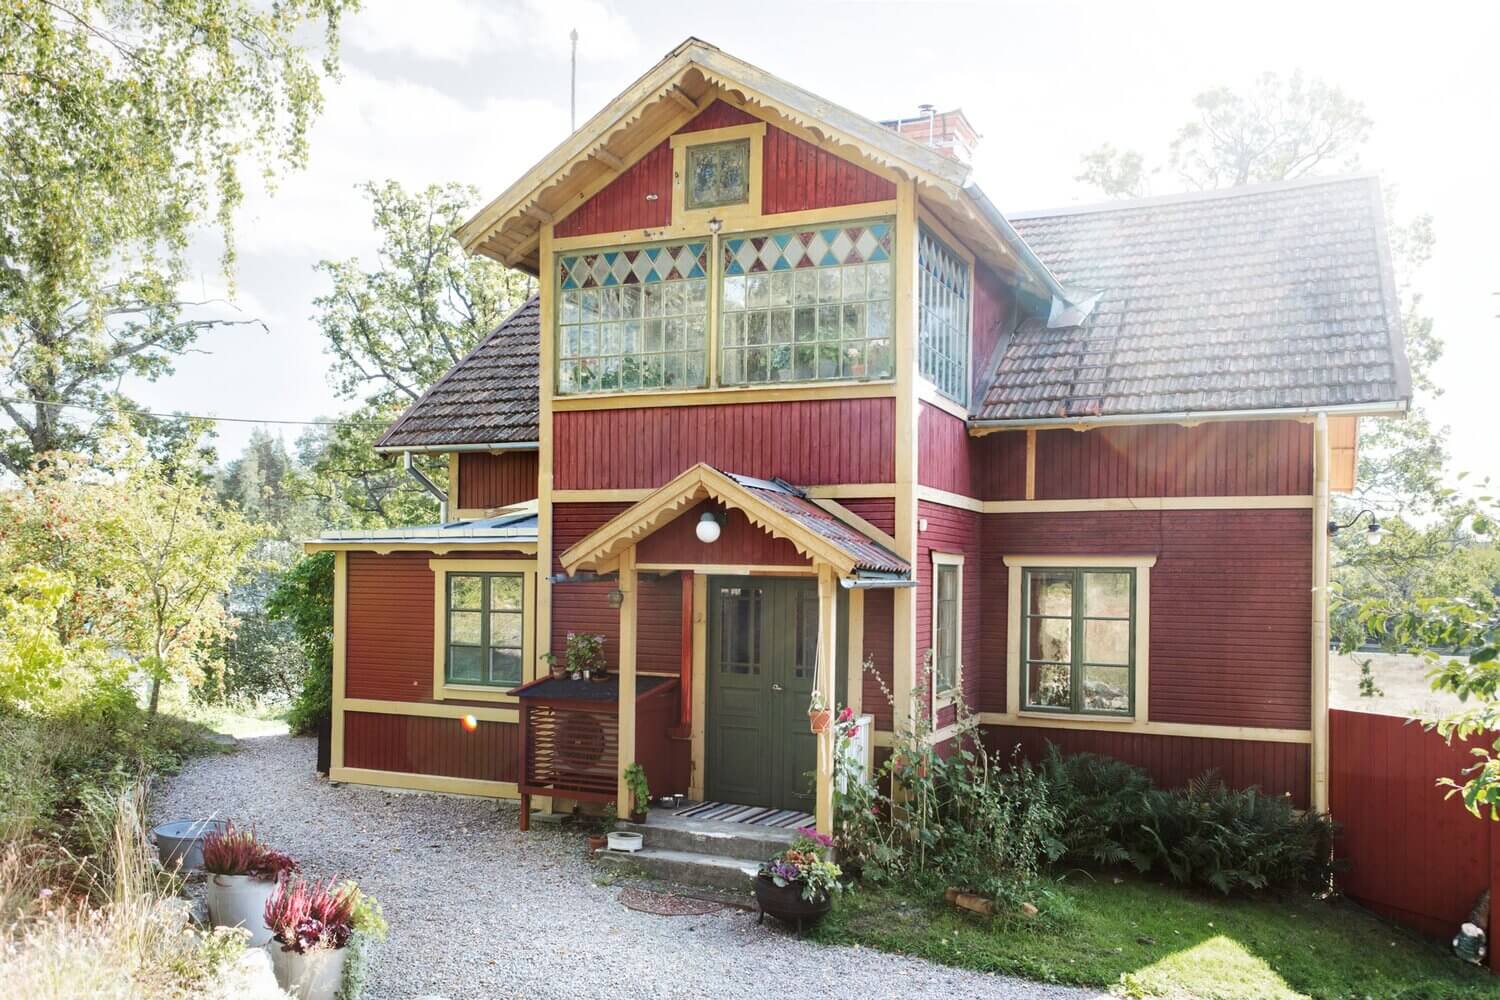 FloralsandOriginalDetailsinaTraditionalSwedishHome TheNordroom A Cozy Vintage Look For a Traditional Swedish Home